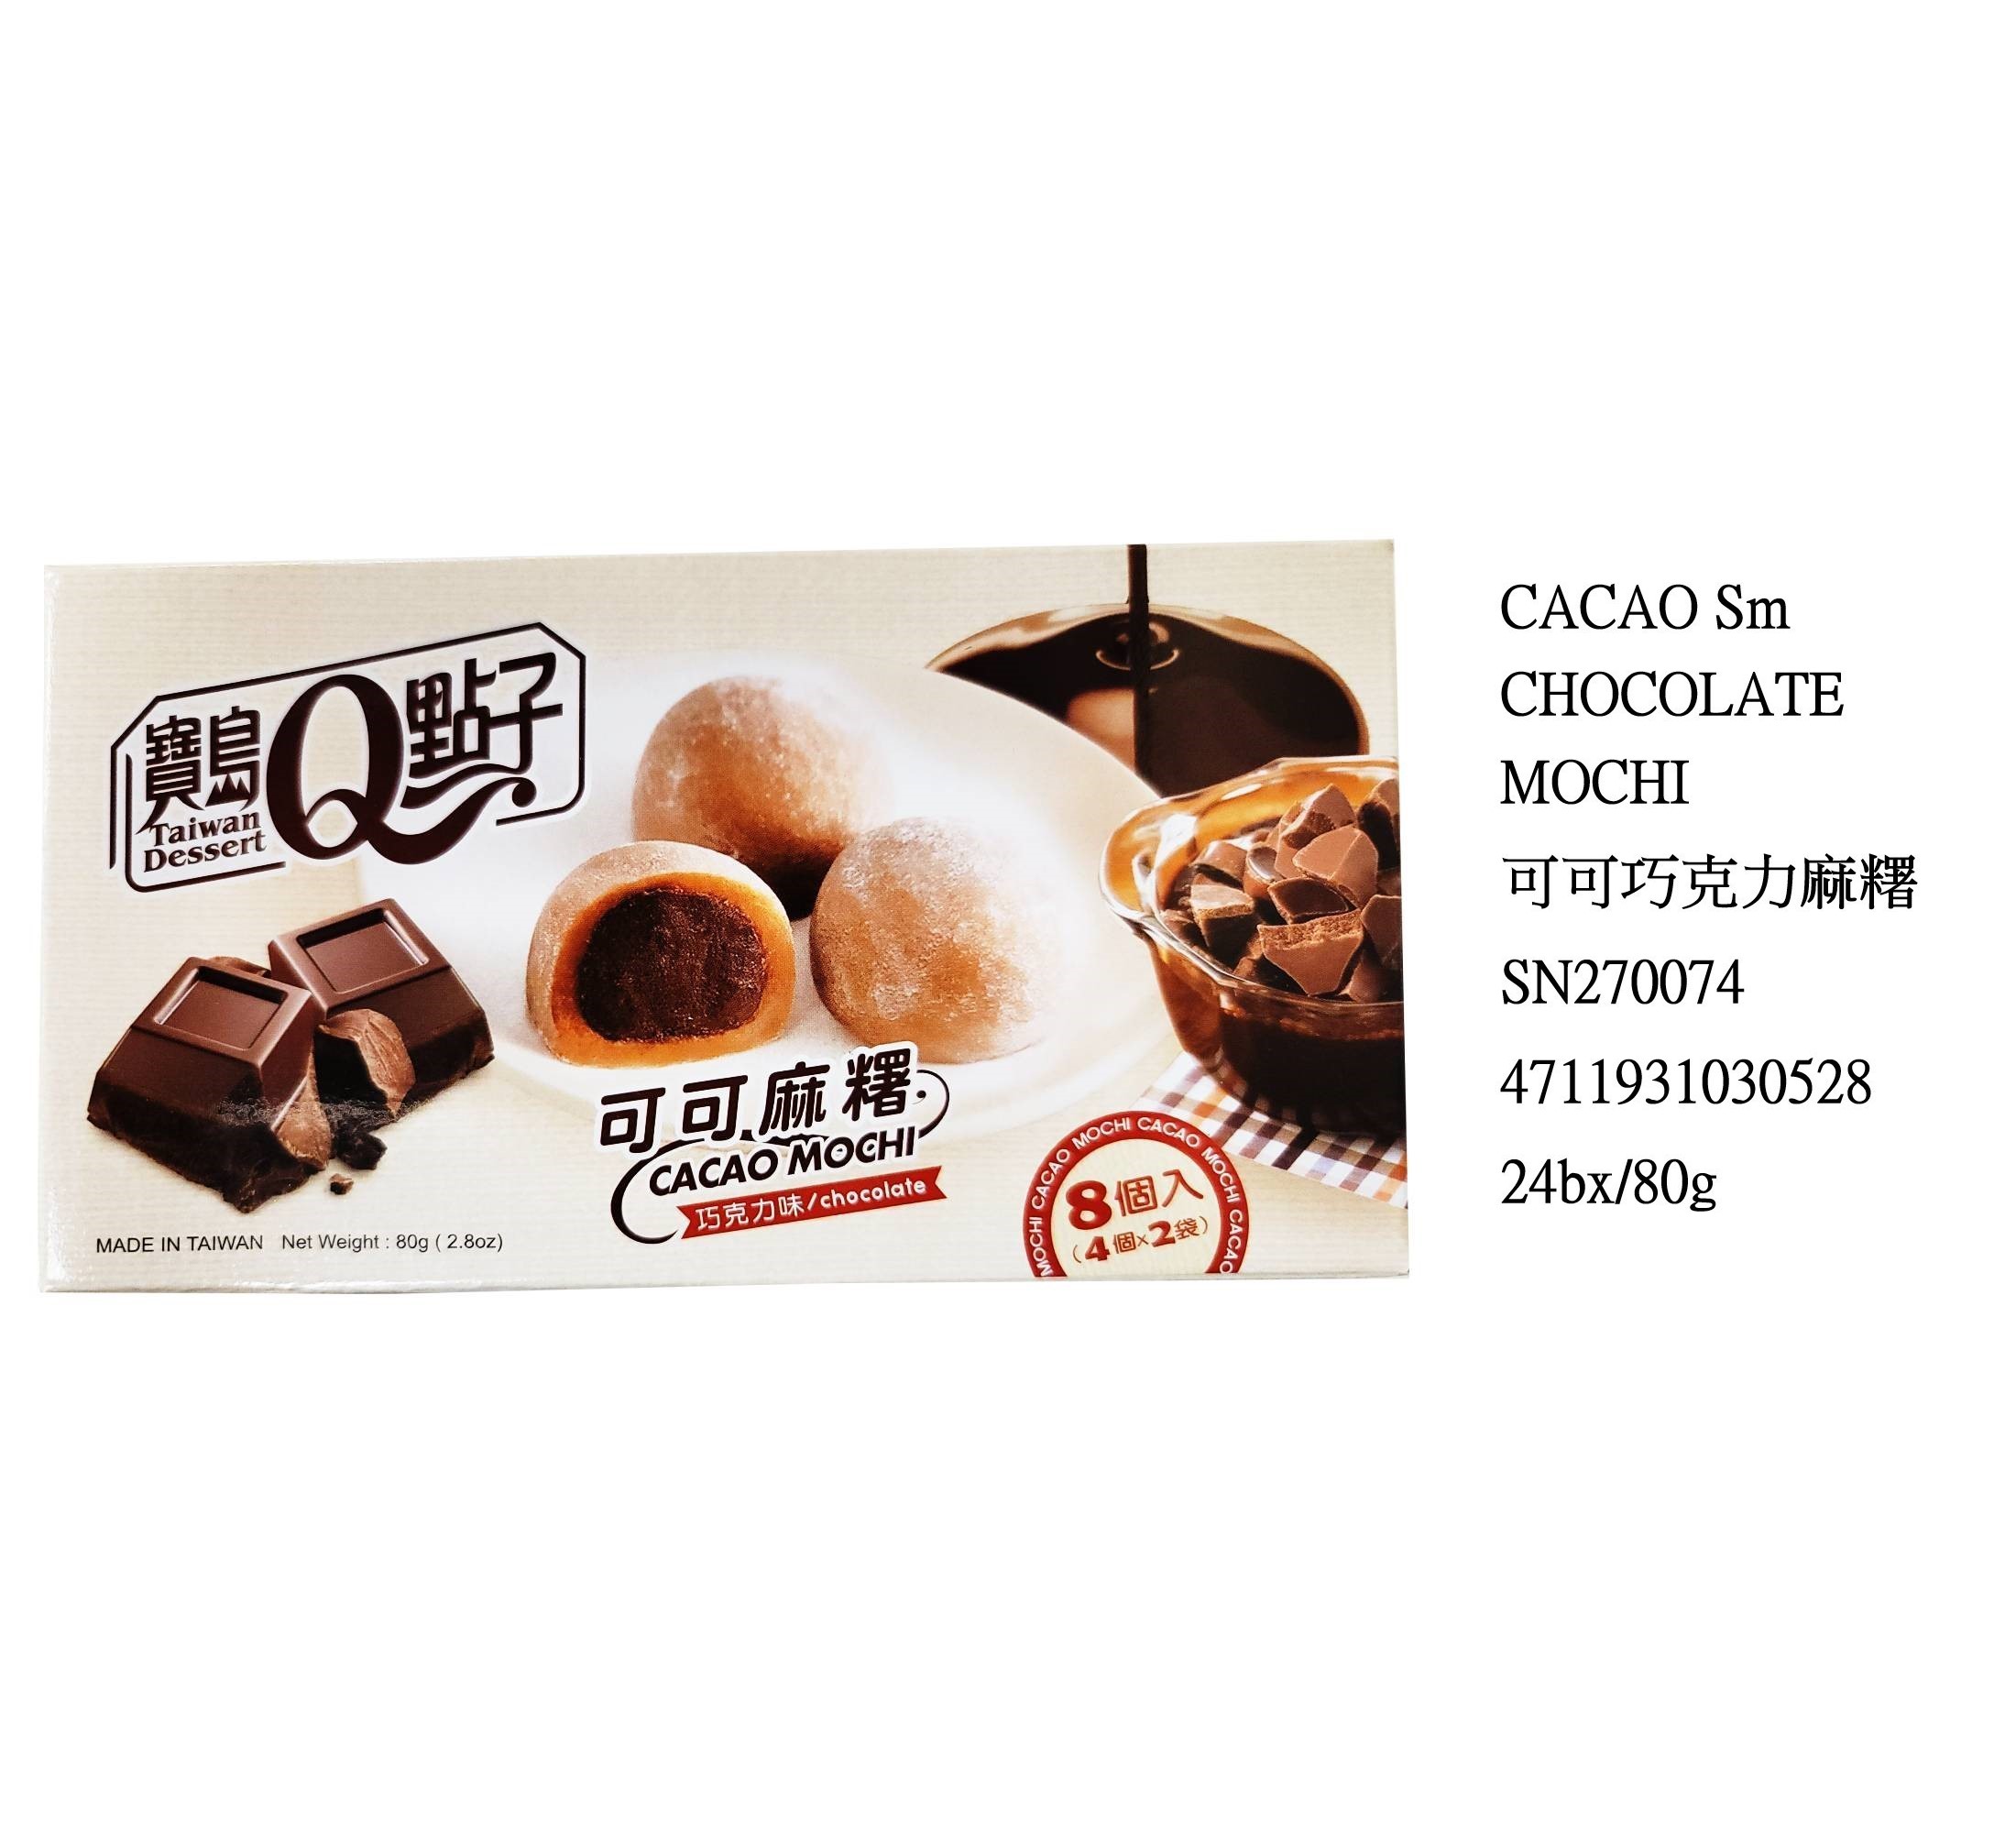 TAIWAN DESSERT CACAO MOCHI CHOCOLATE SN270074